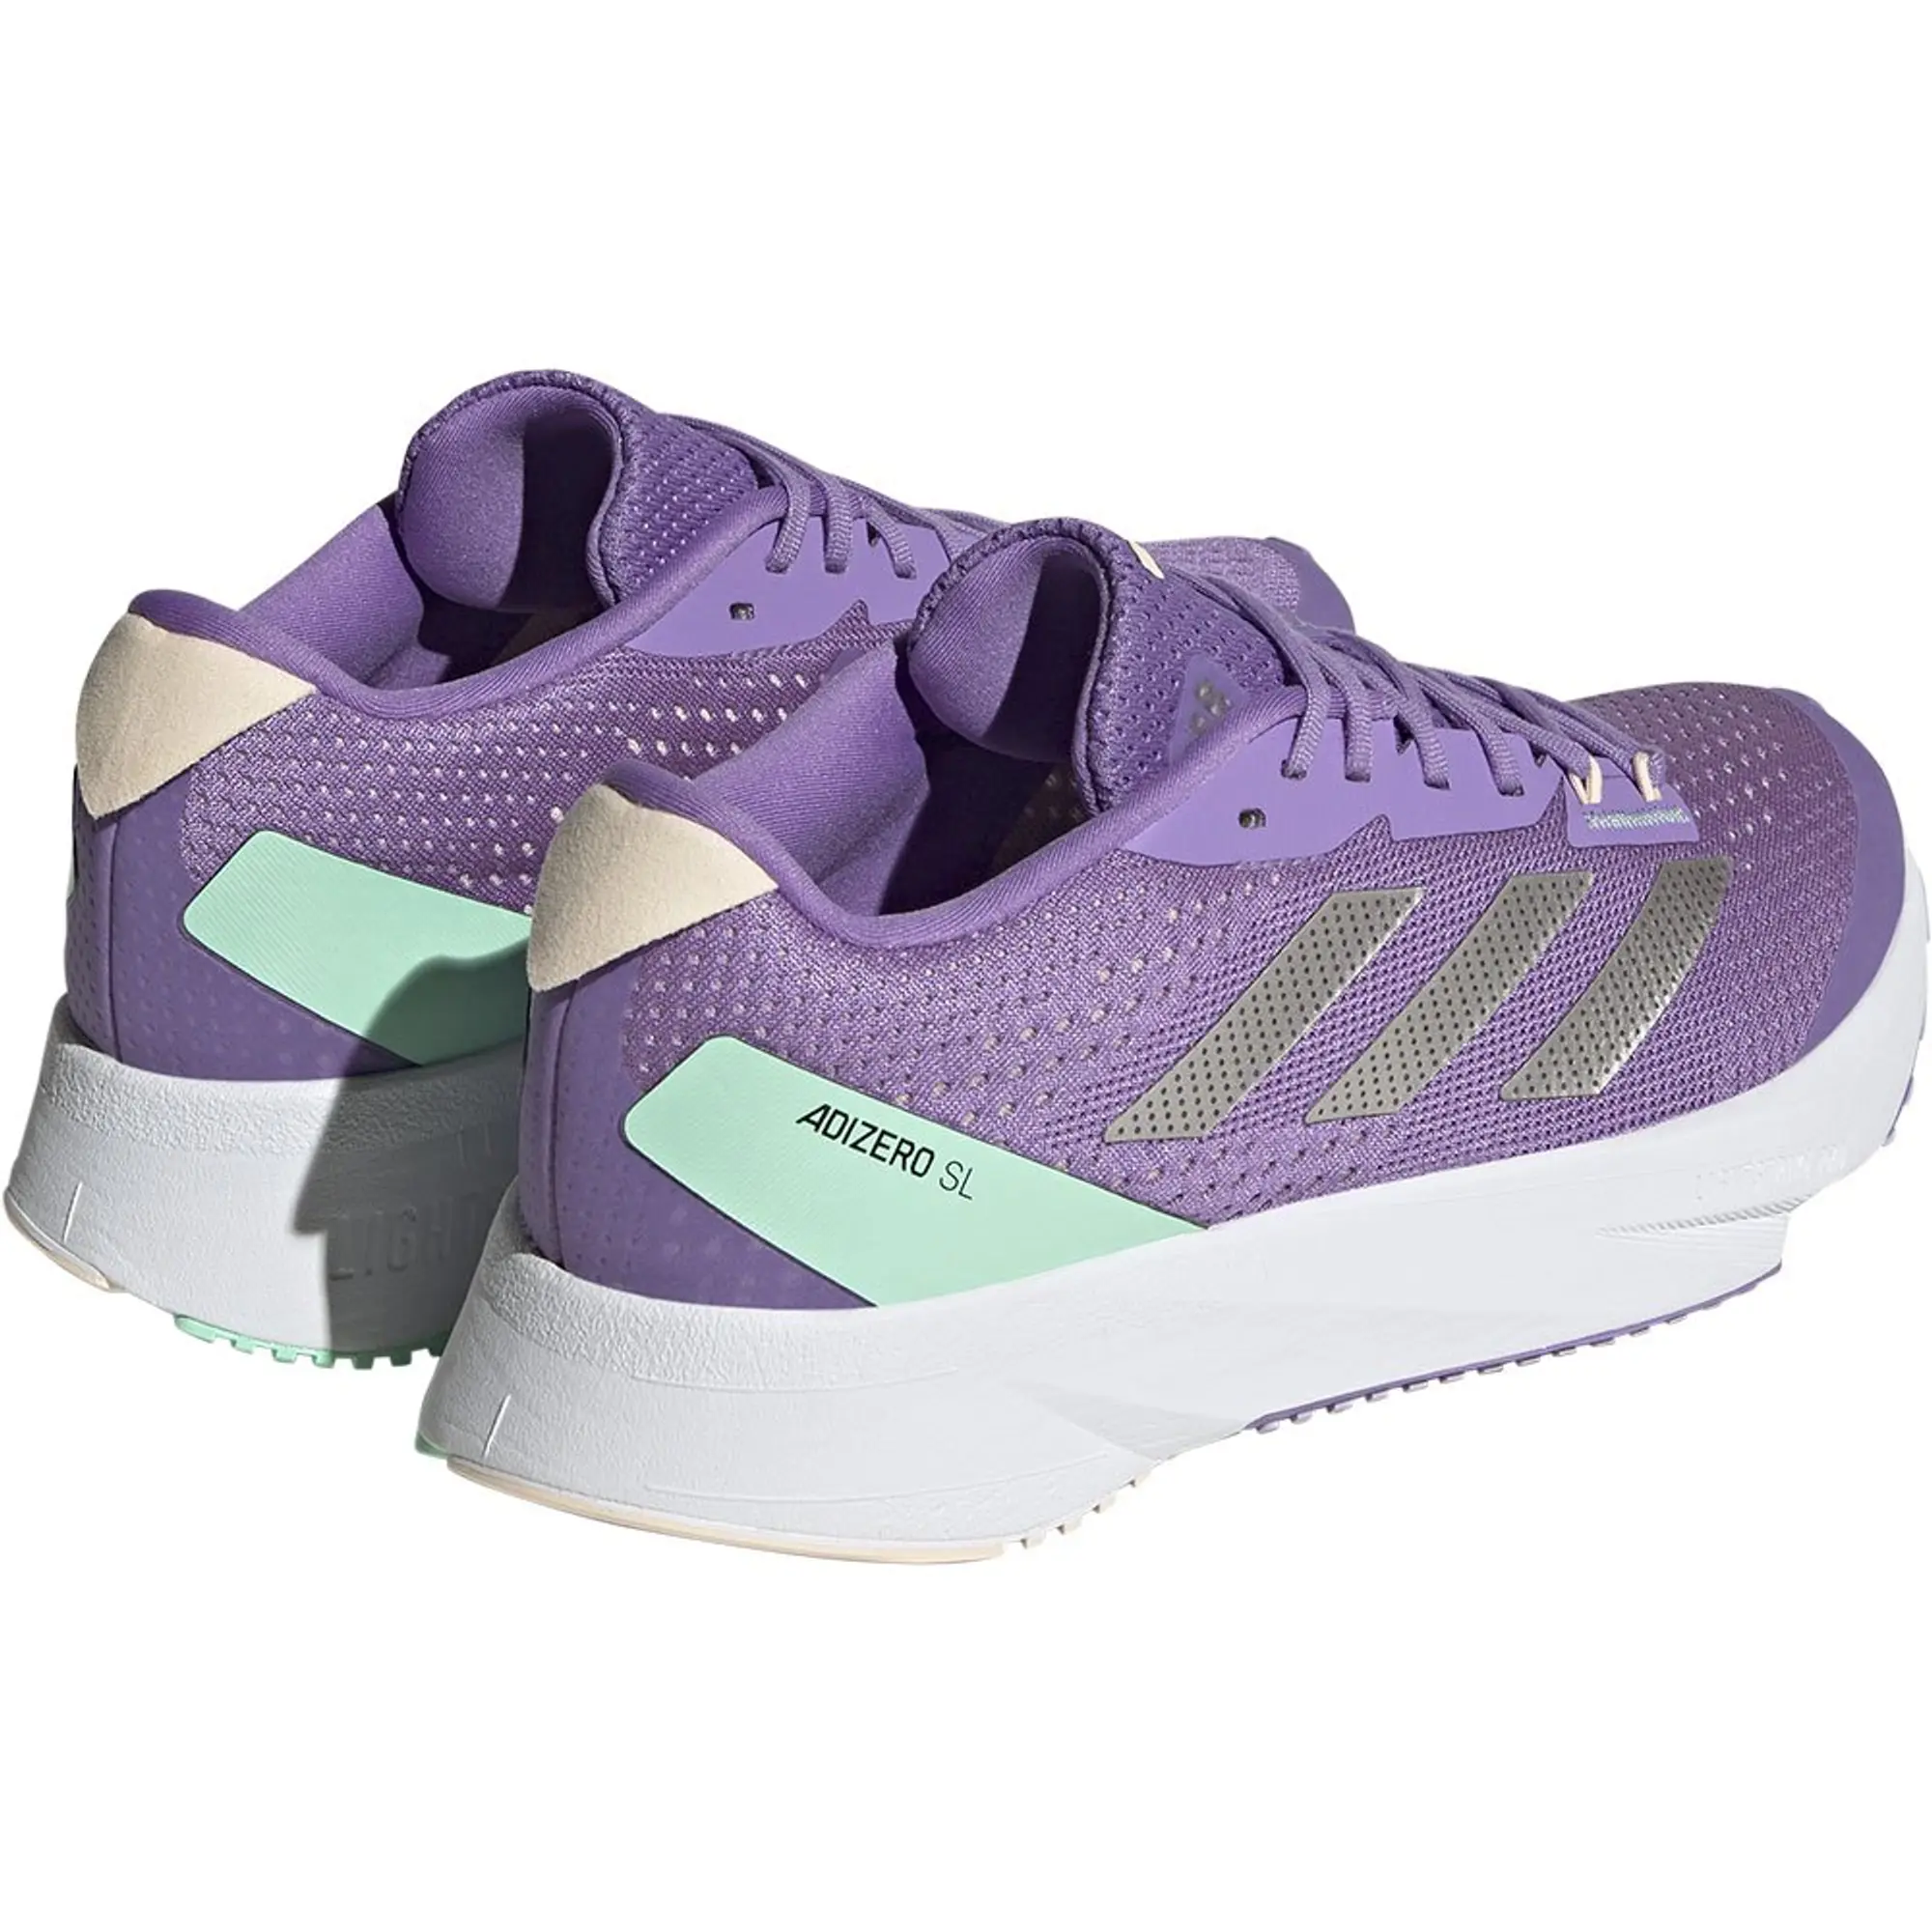 Adidas Adizero Sl Running Shoes  EU 42 Woman -